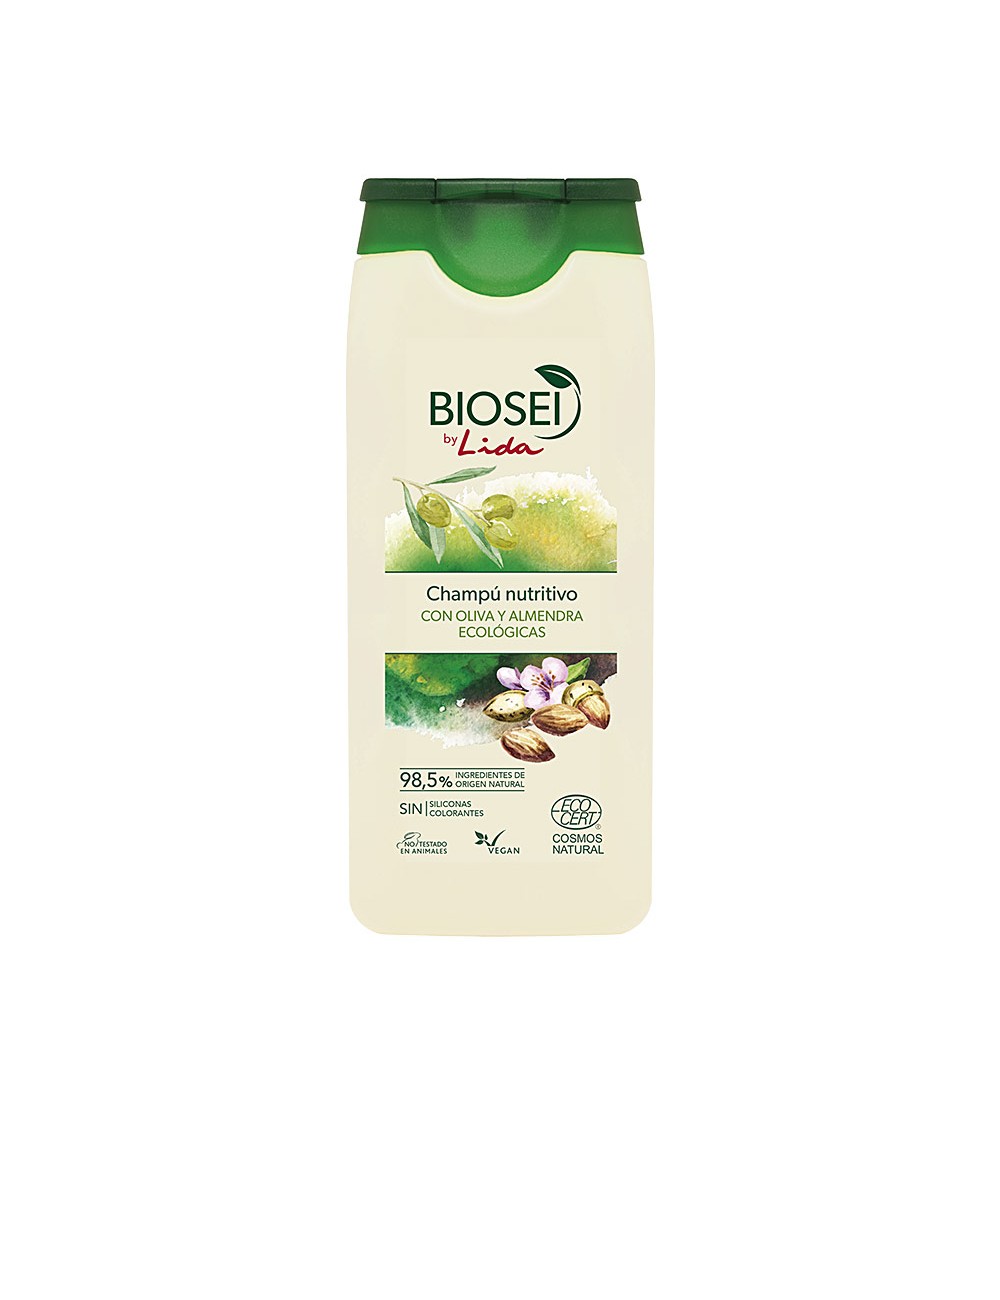 BIOSEI Shampooing Ecocert Olive & amande 500 ml